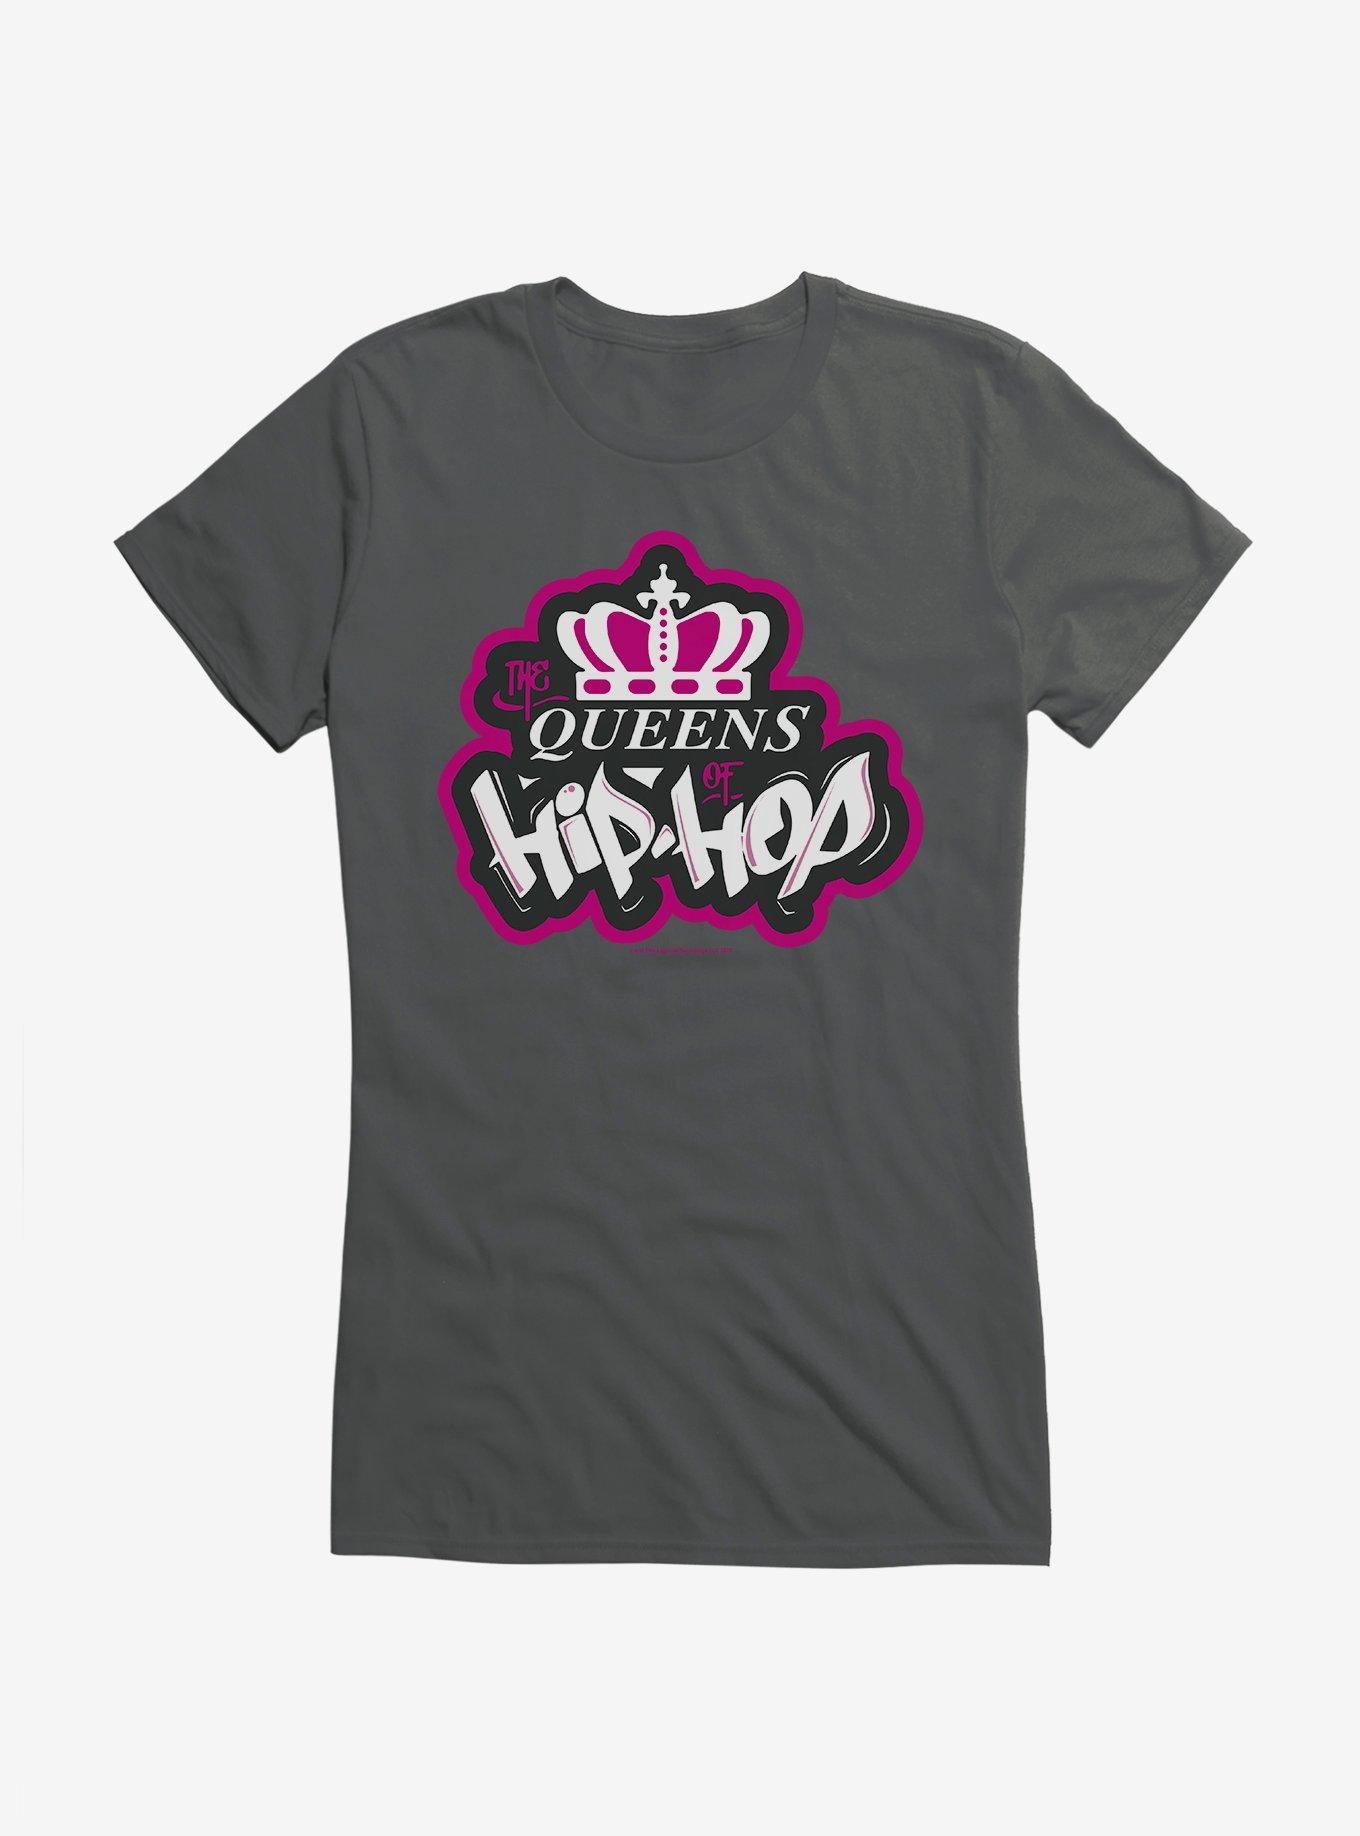 hip hop shirts for girls